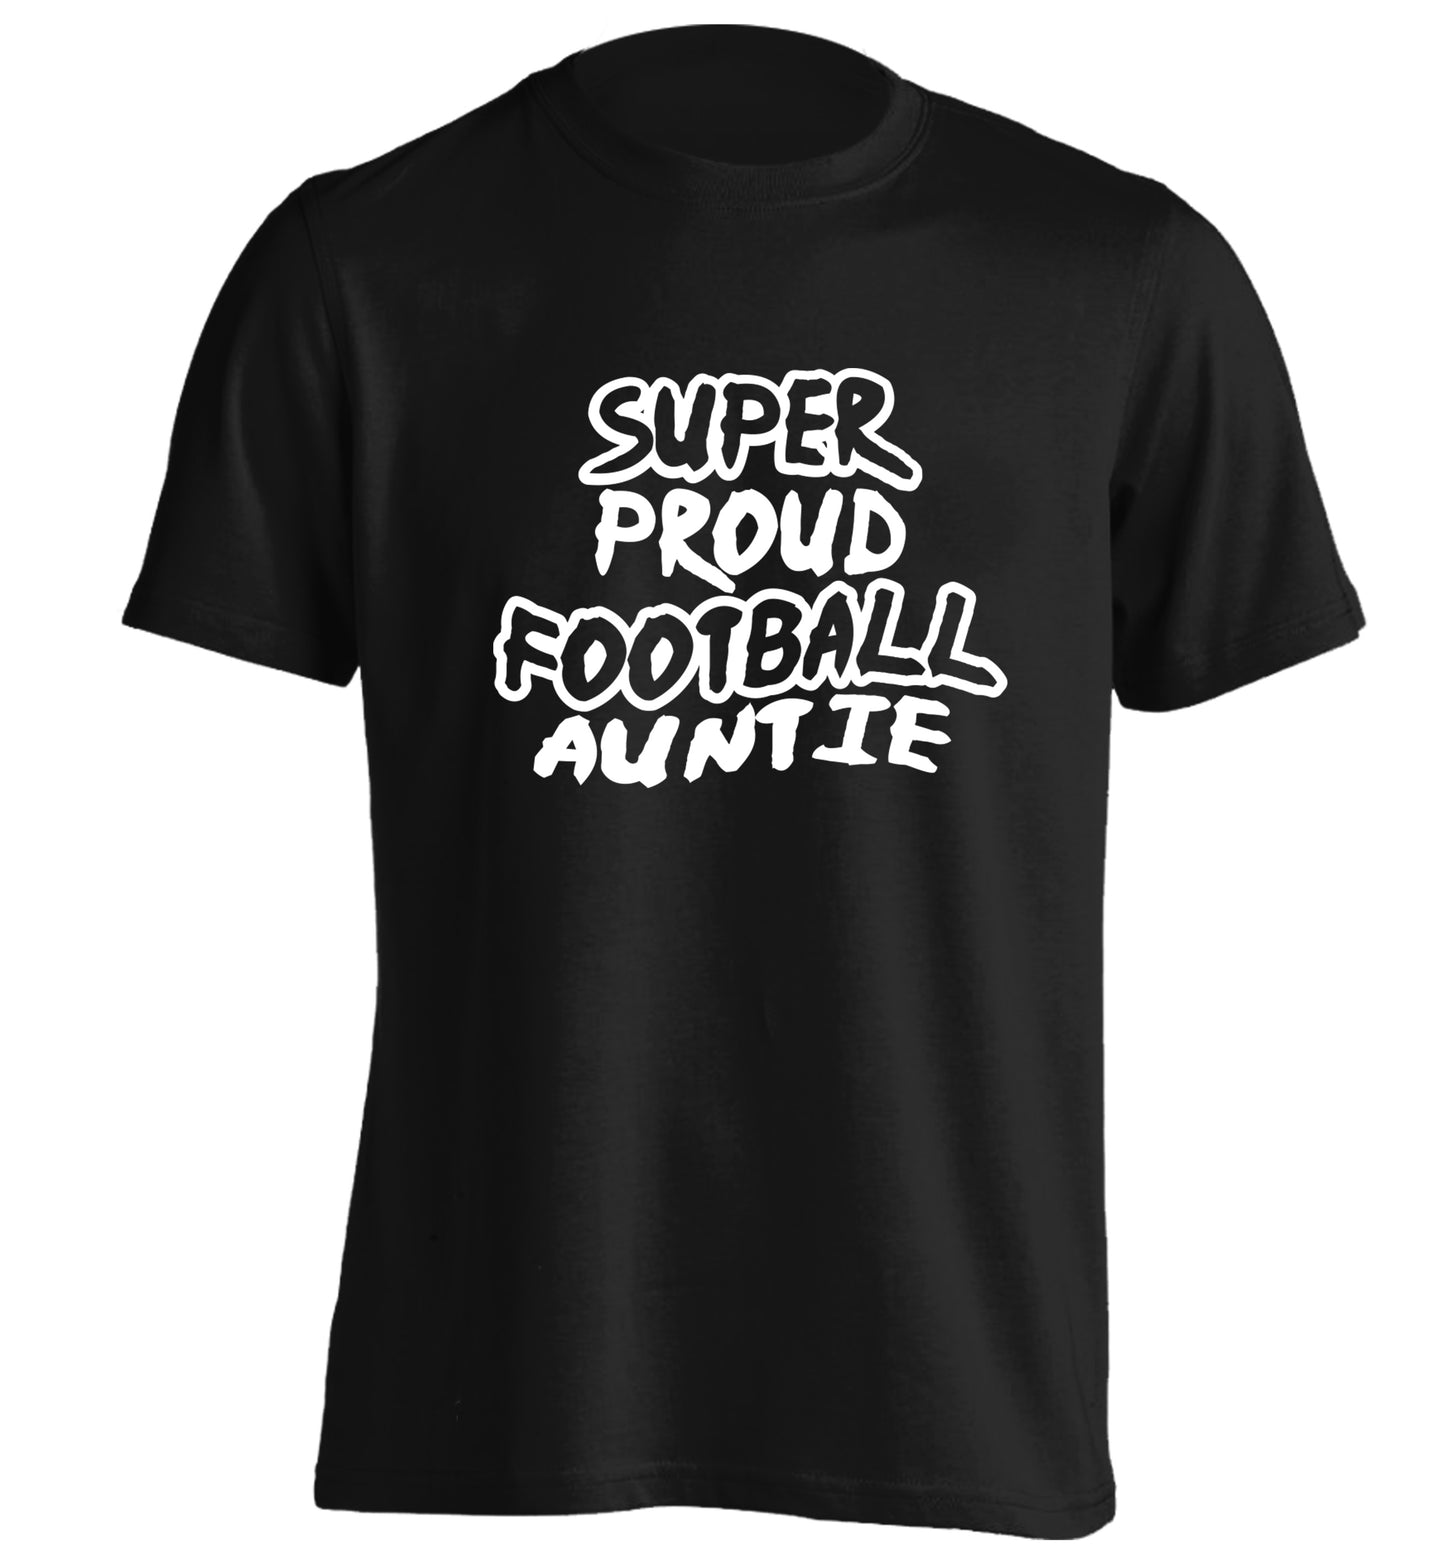 Super proud football auntie adults unisexblack Tshirt 2XL